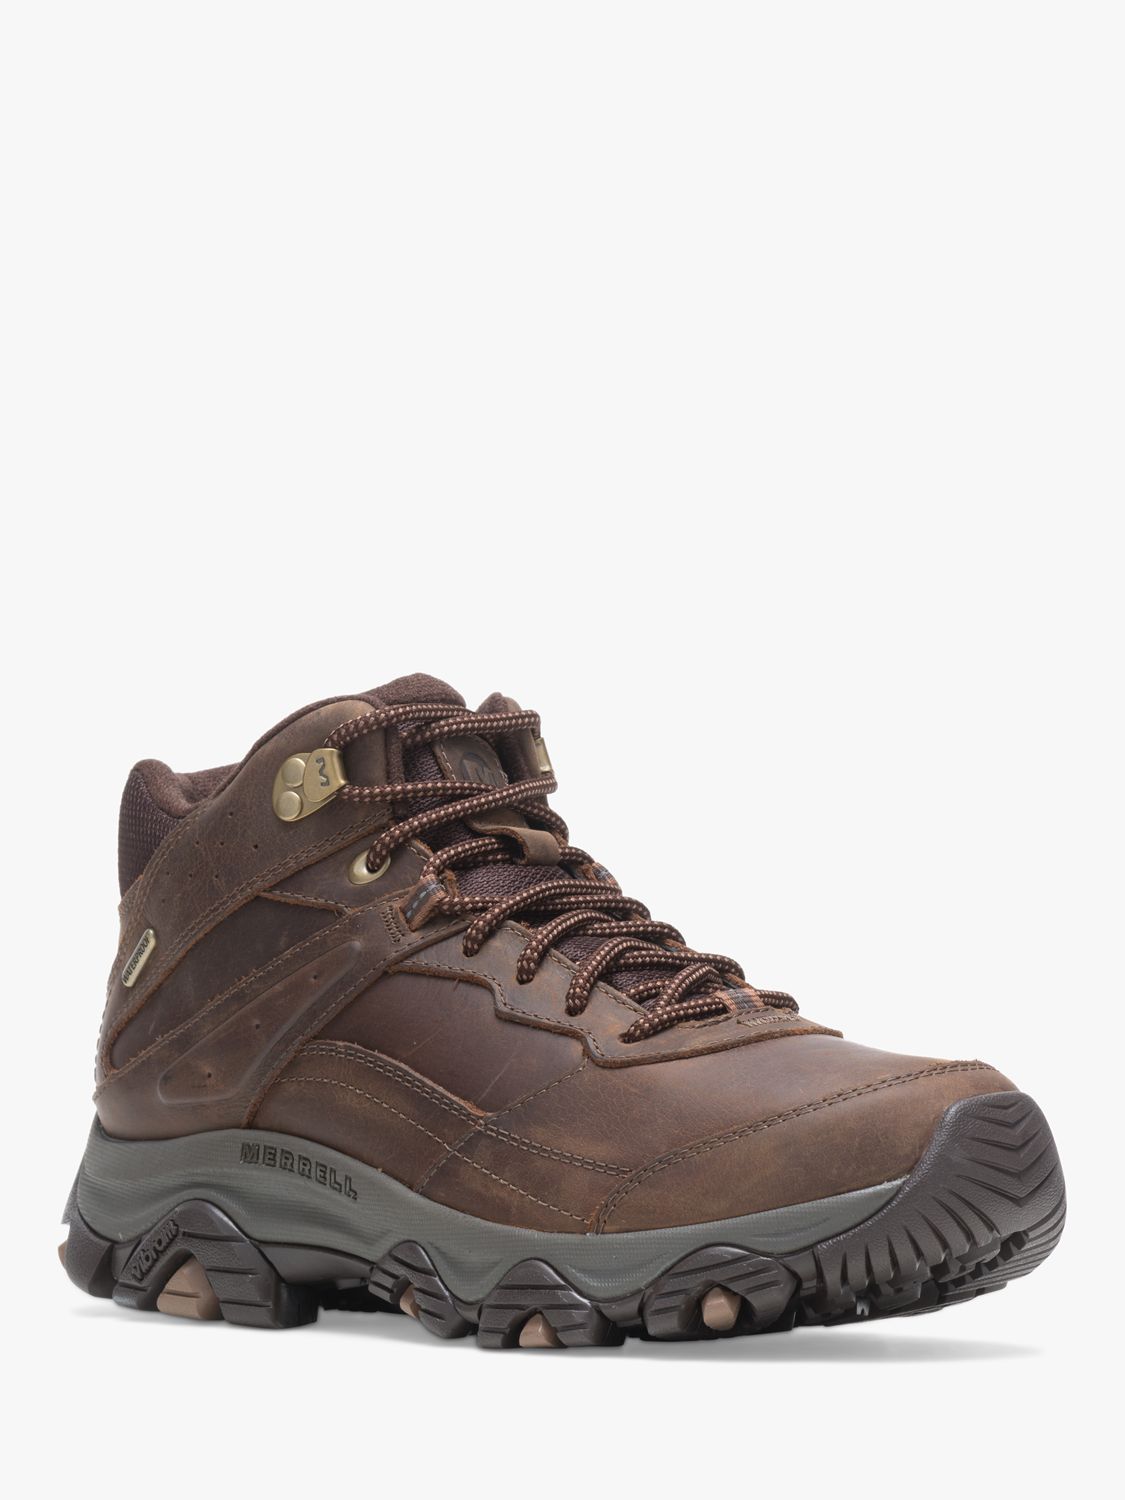 Merrell Big Girls Moab 3 Hiking Boots - Waterproof - Save 50%